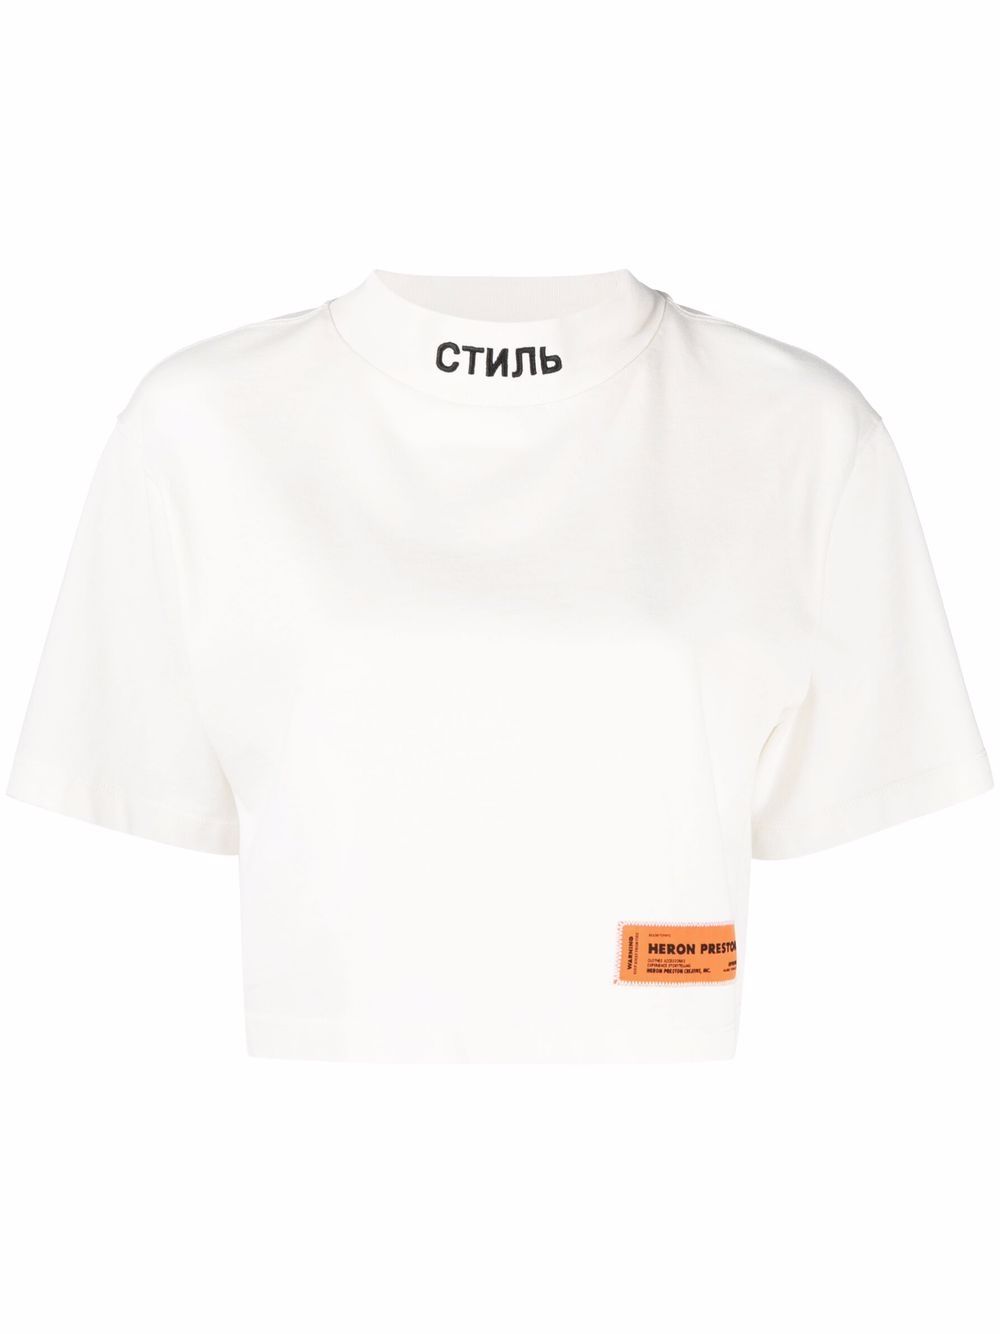 СТИЛЬ-logo cropped T-shirt